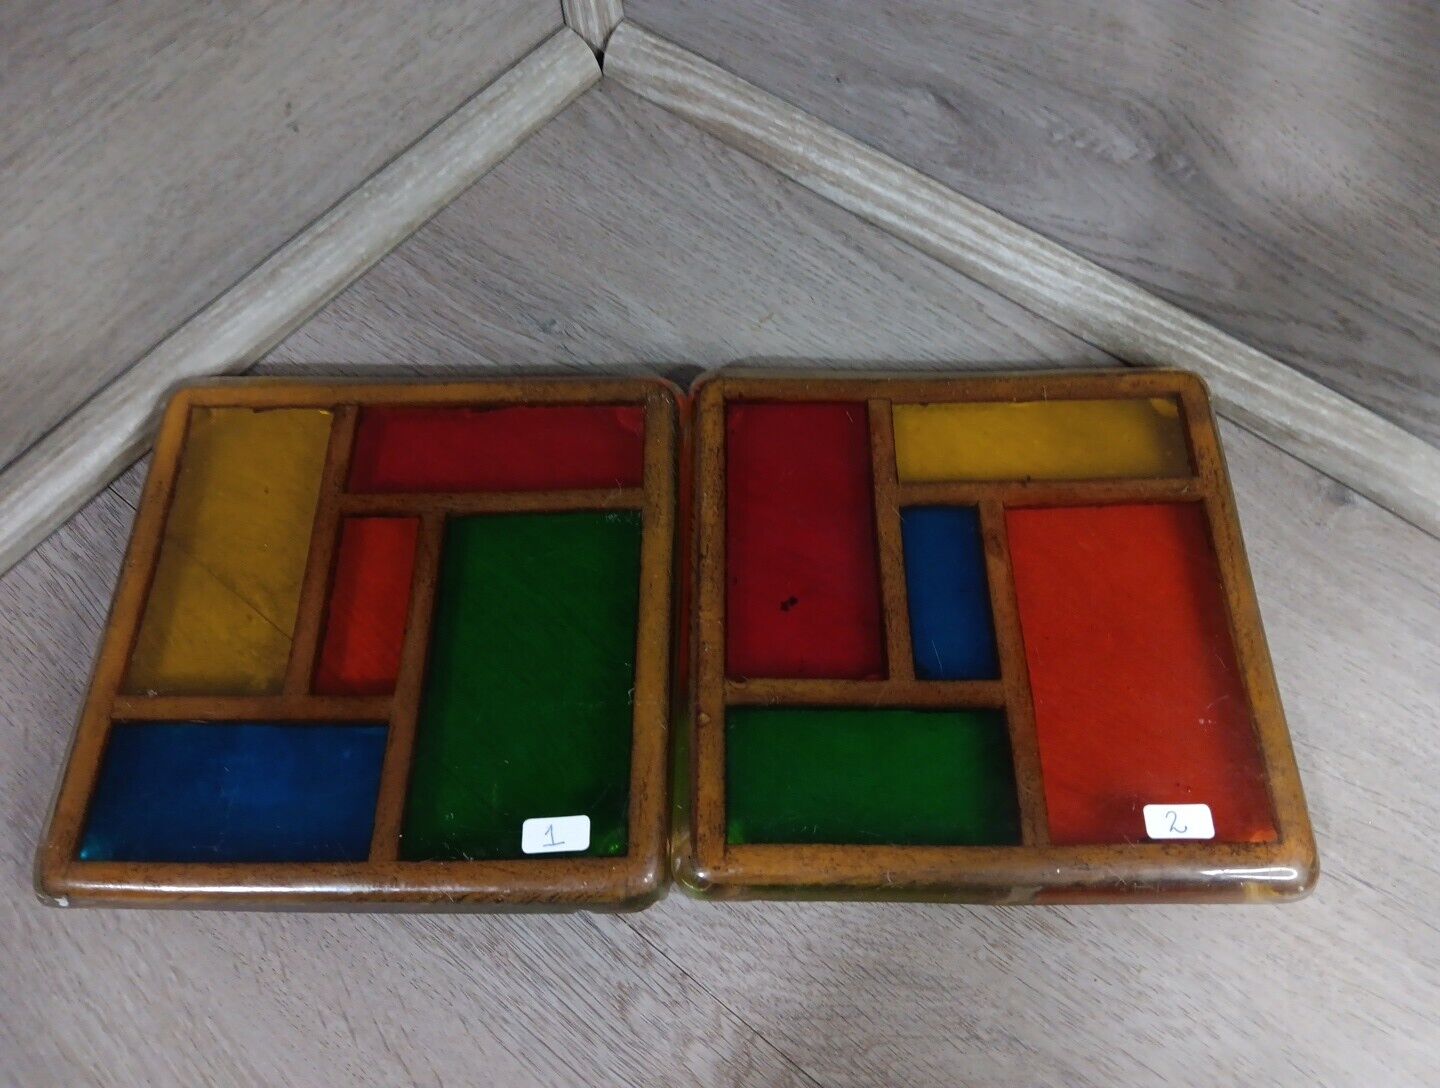 Vntg Mondrian Style Lucite cooking square Trivet Mod Multi Color  Rare Find